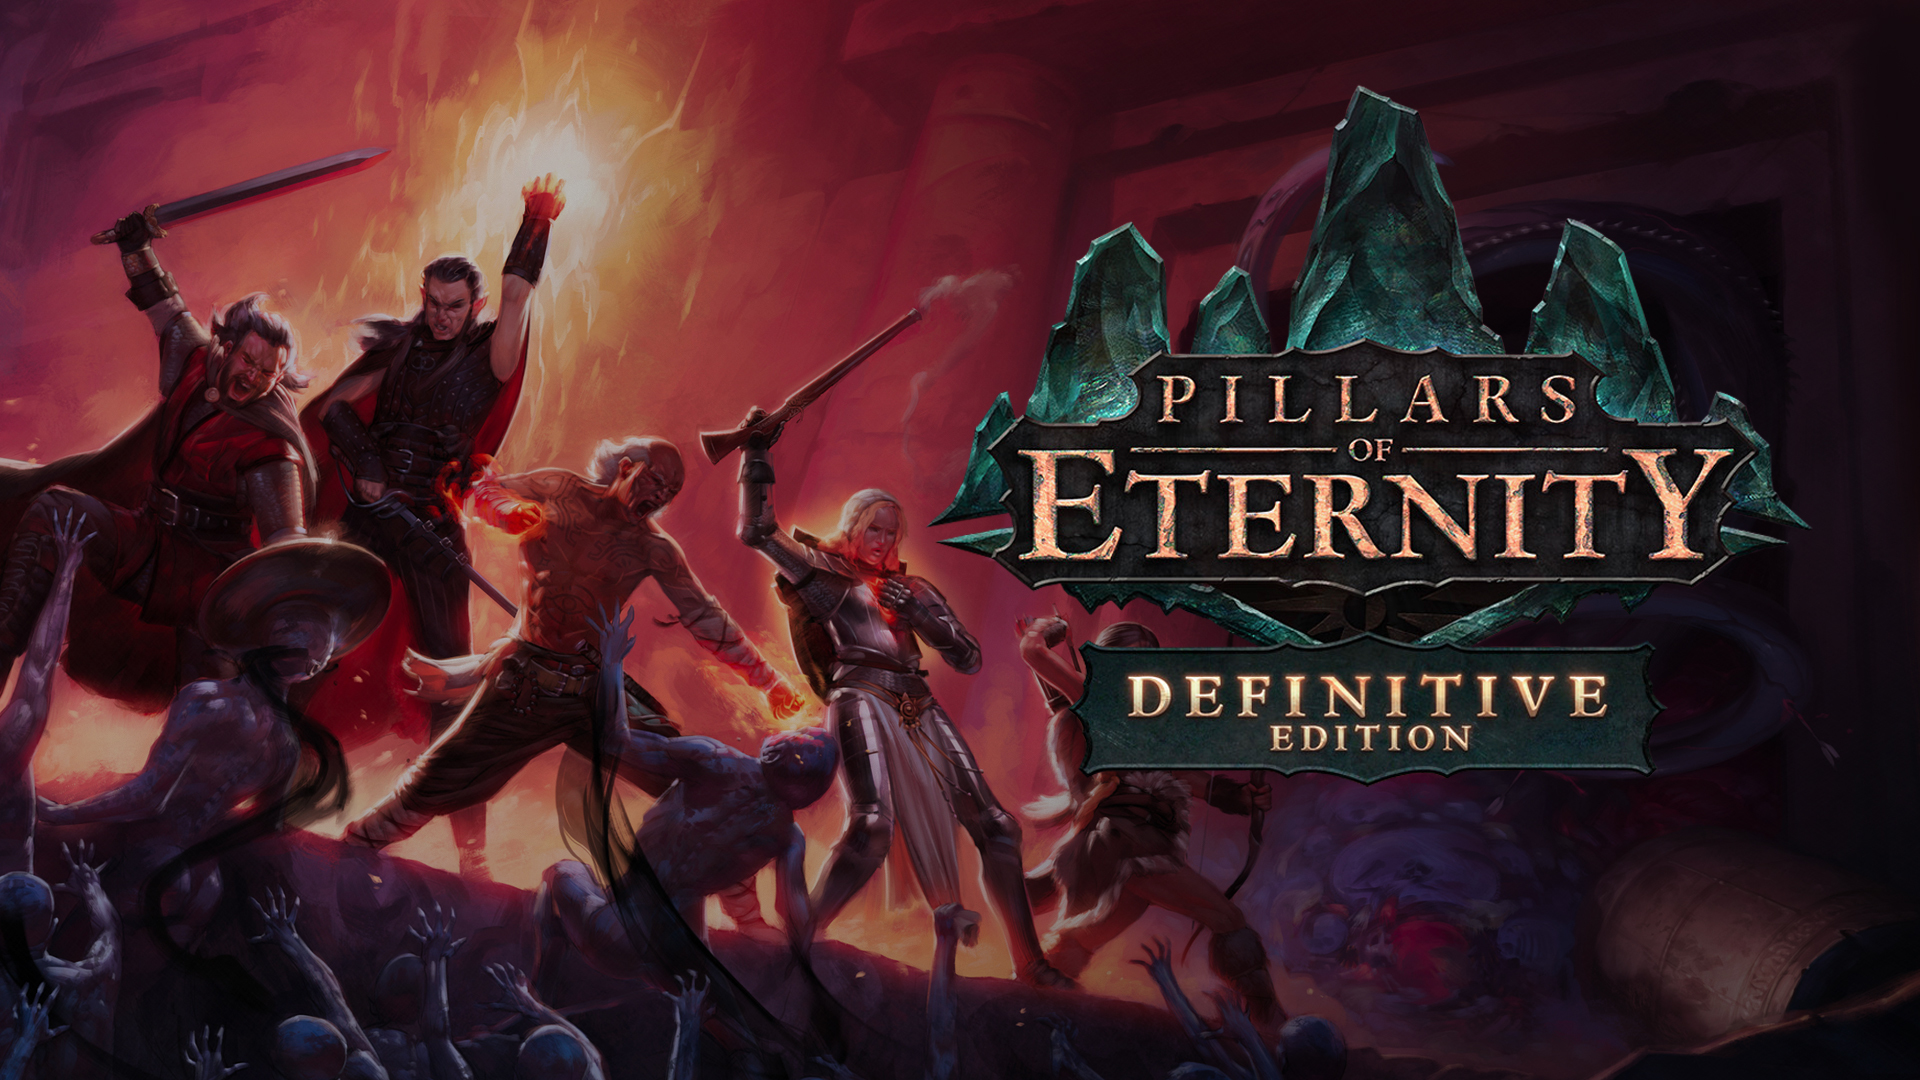 Pillars of eternity free download